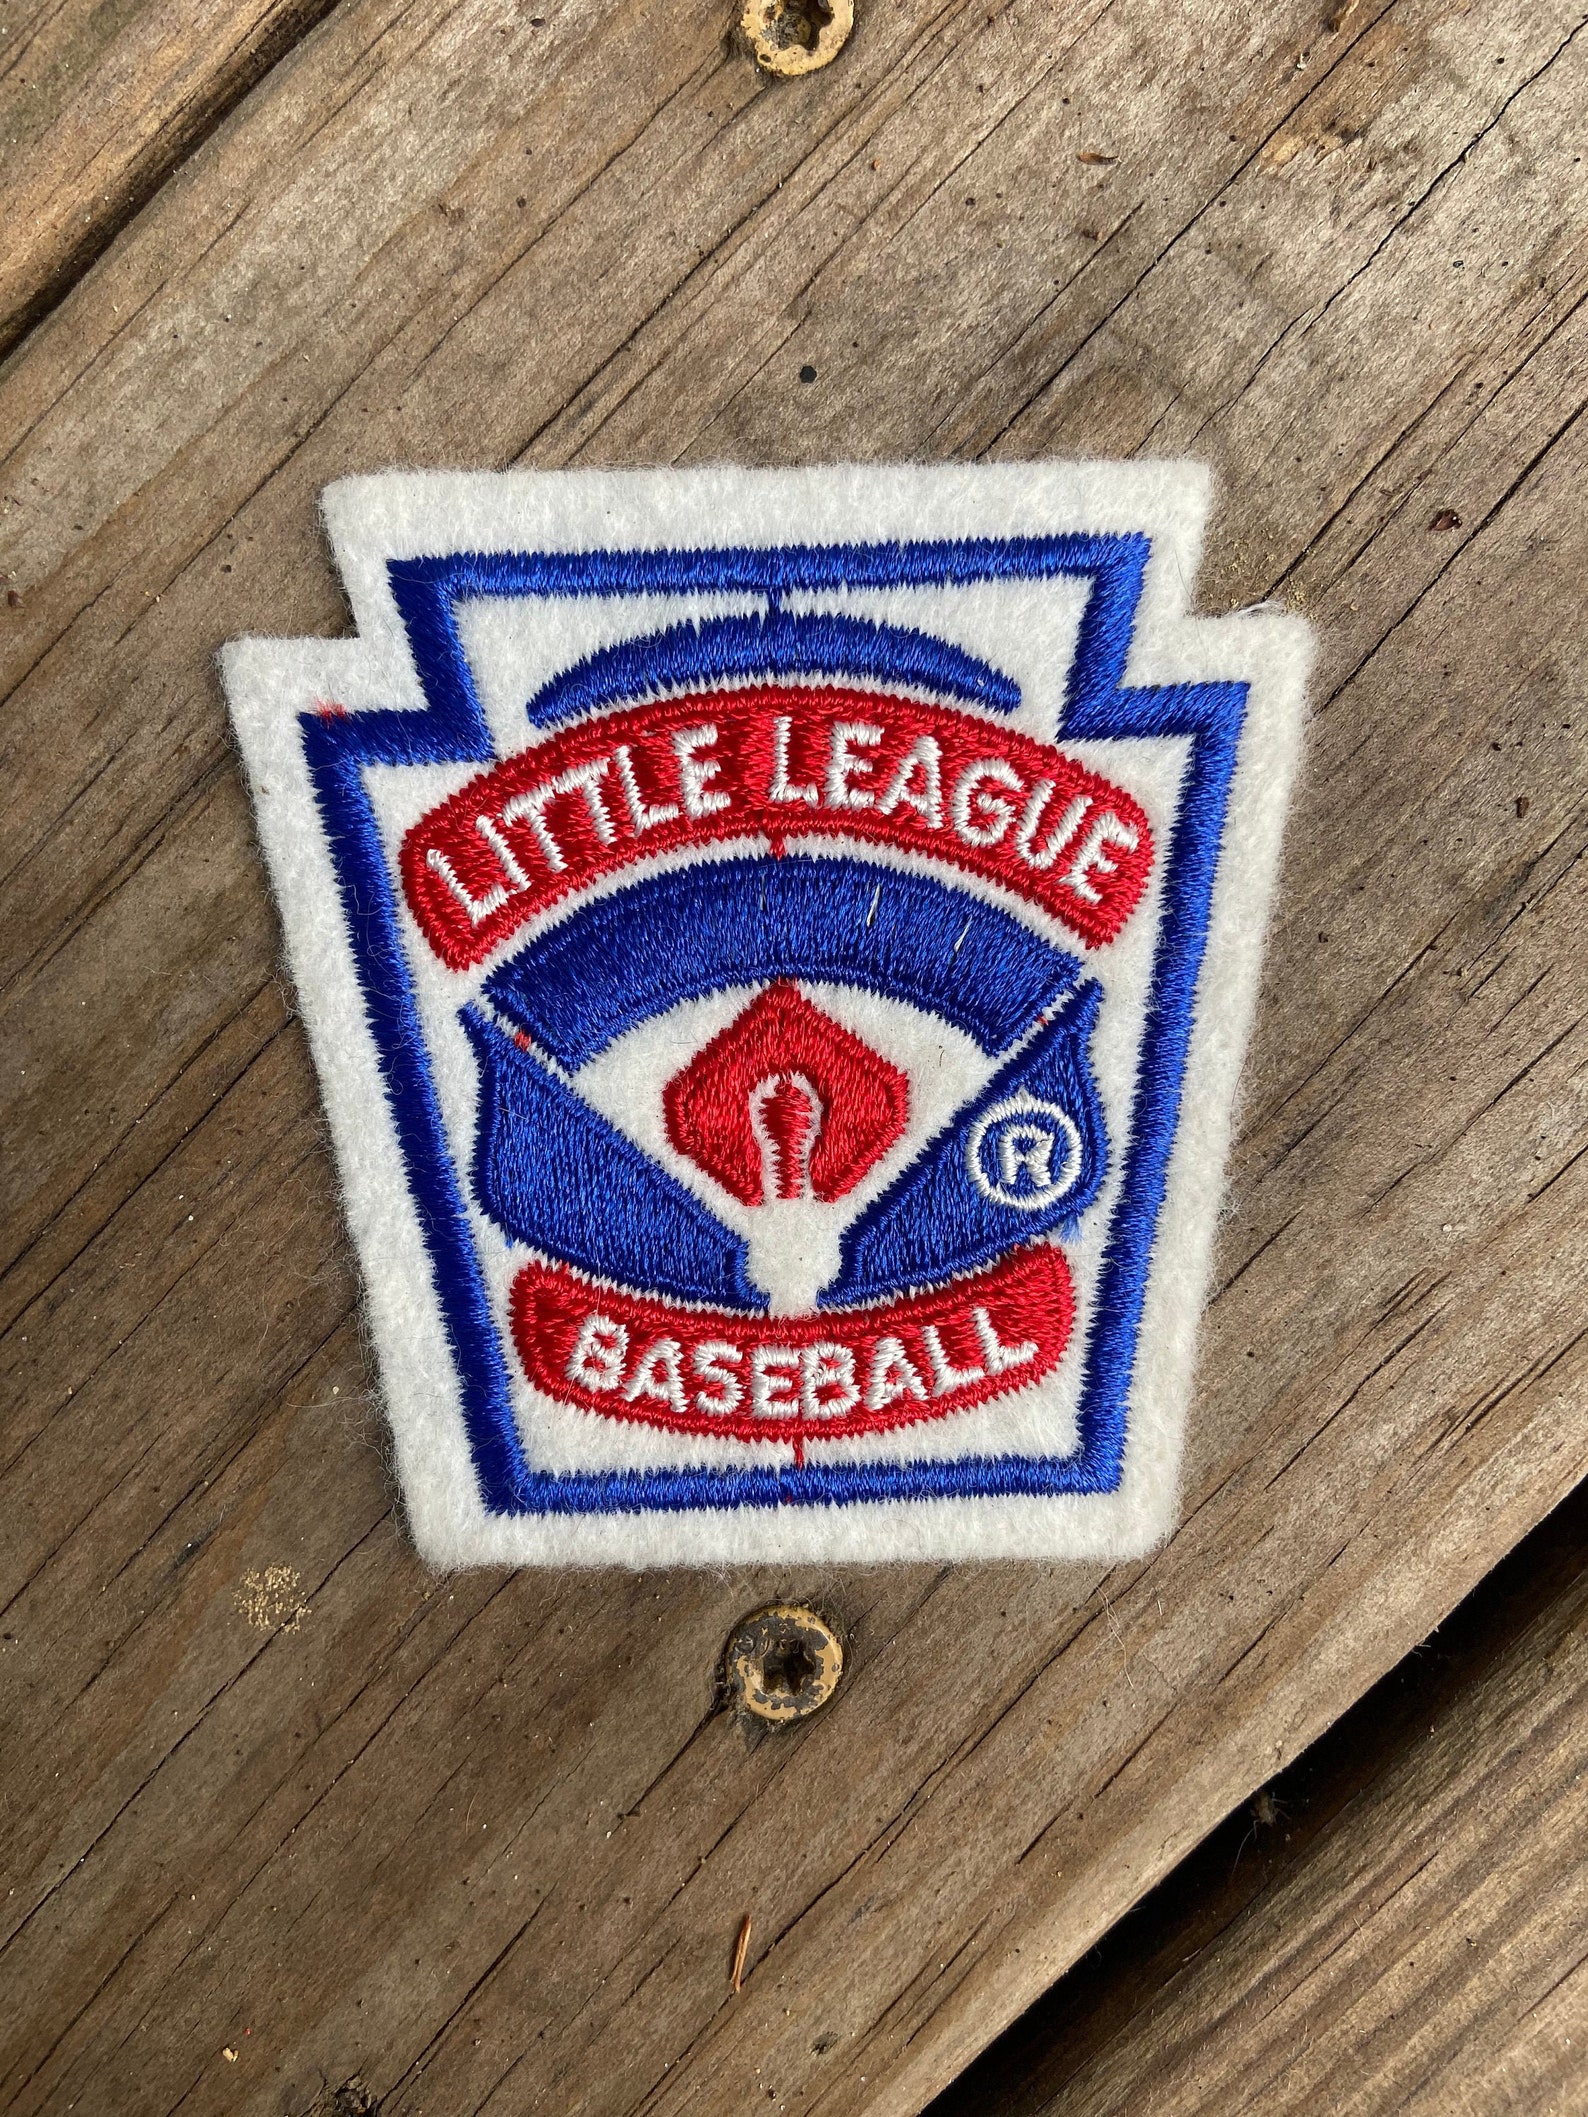 Little League Baseball Patch | Etsy